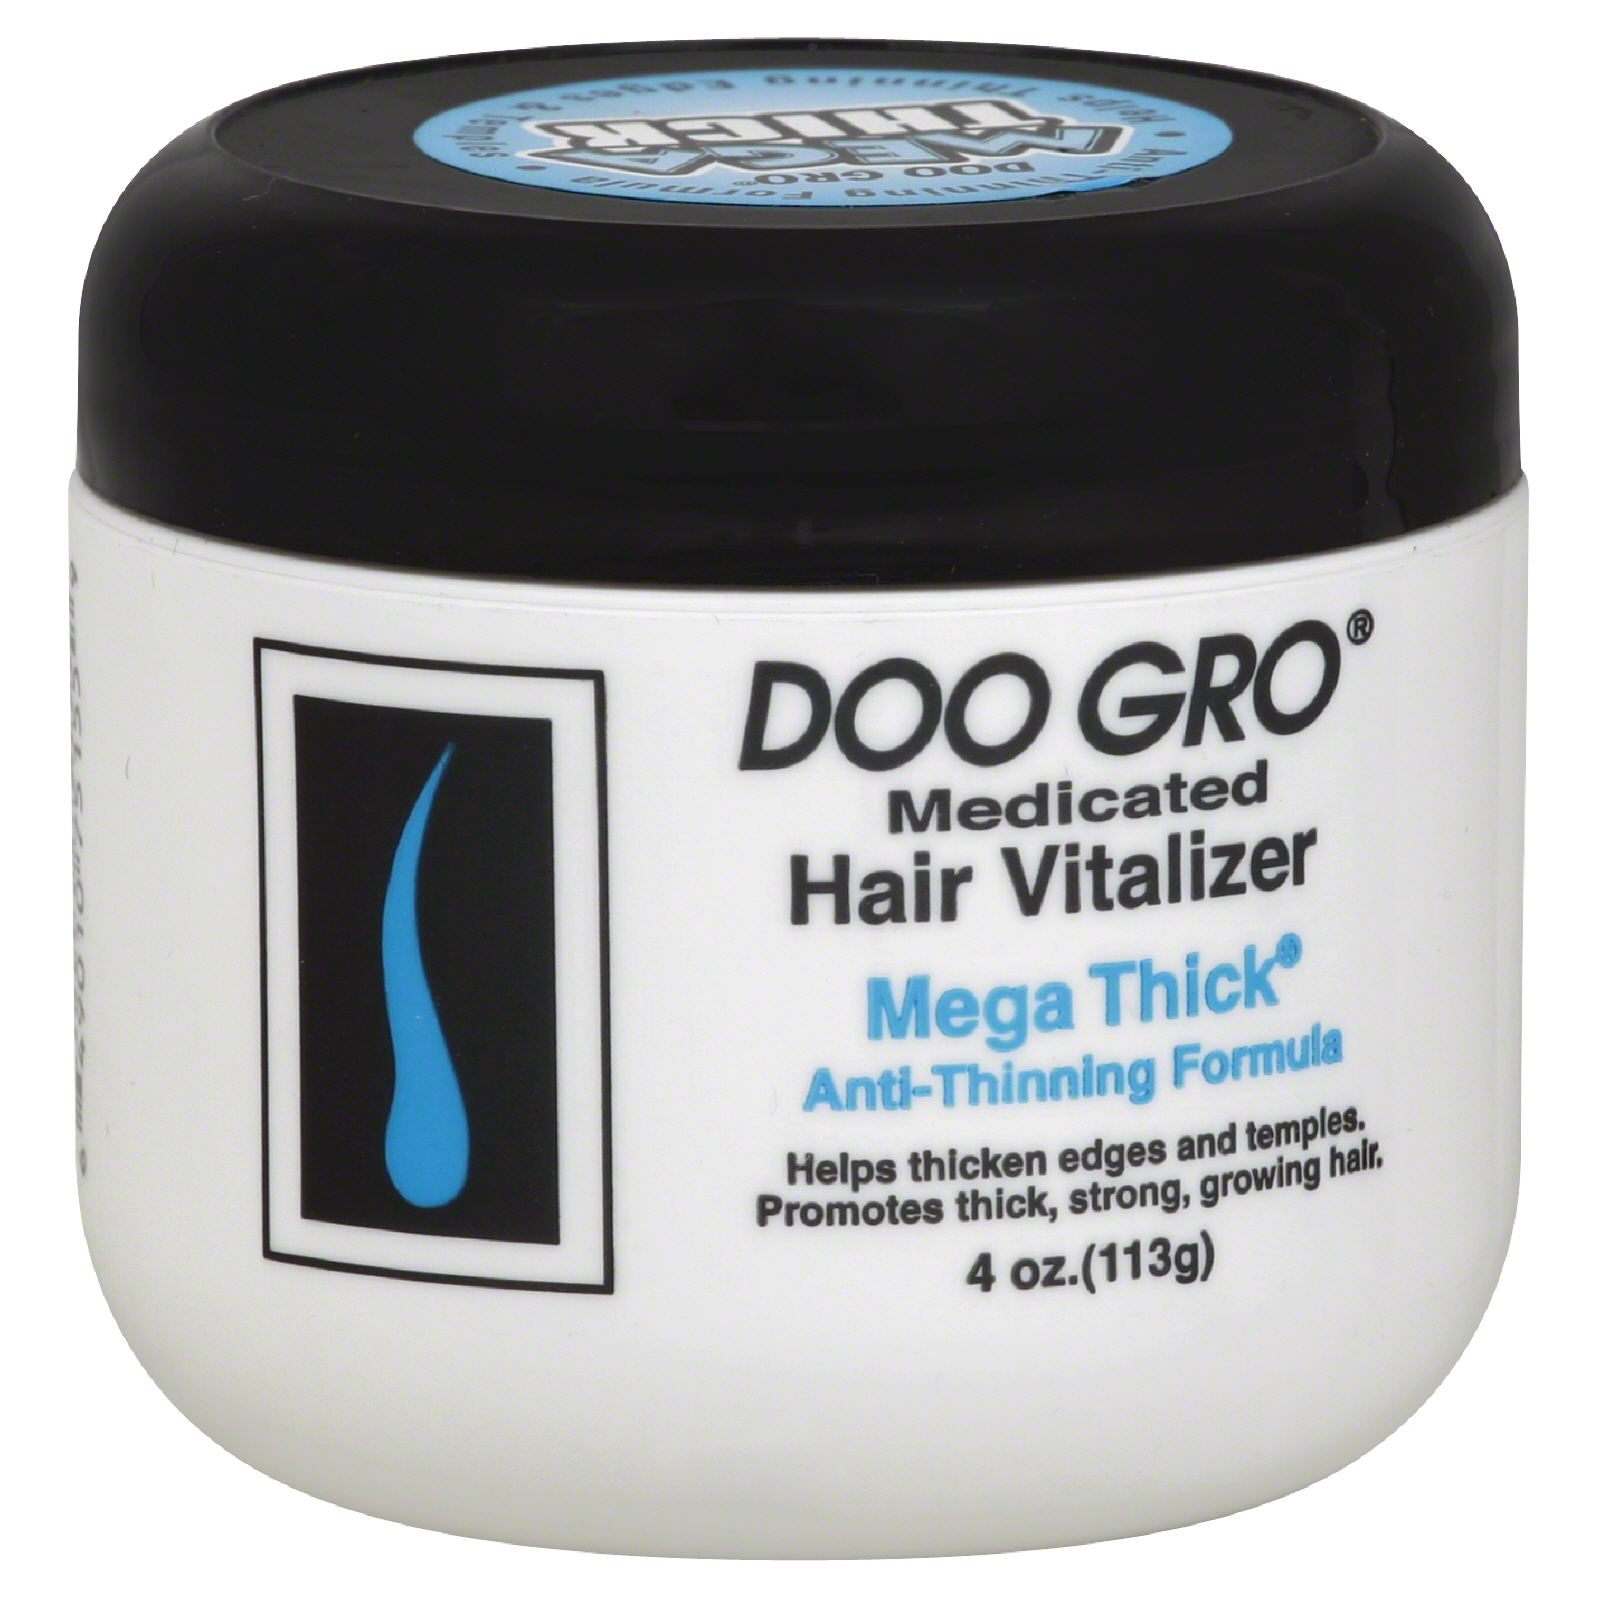 Doo Gro Medicated Hair Vitalizer, Mega Thick Anti Thinning Formula, 4